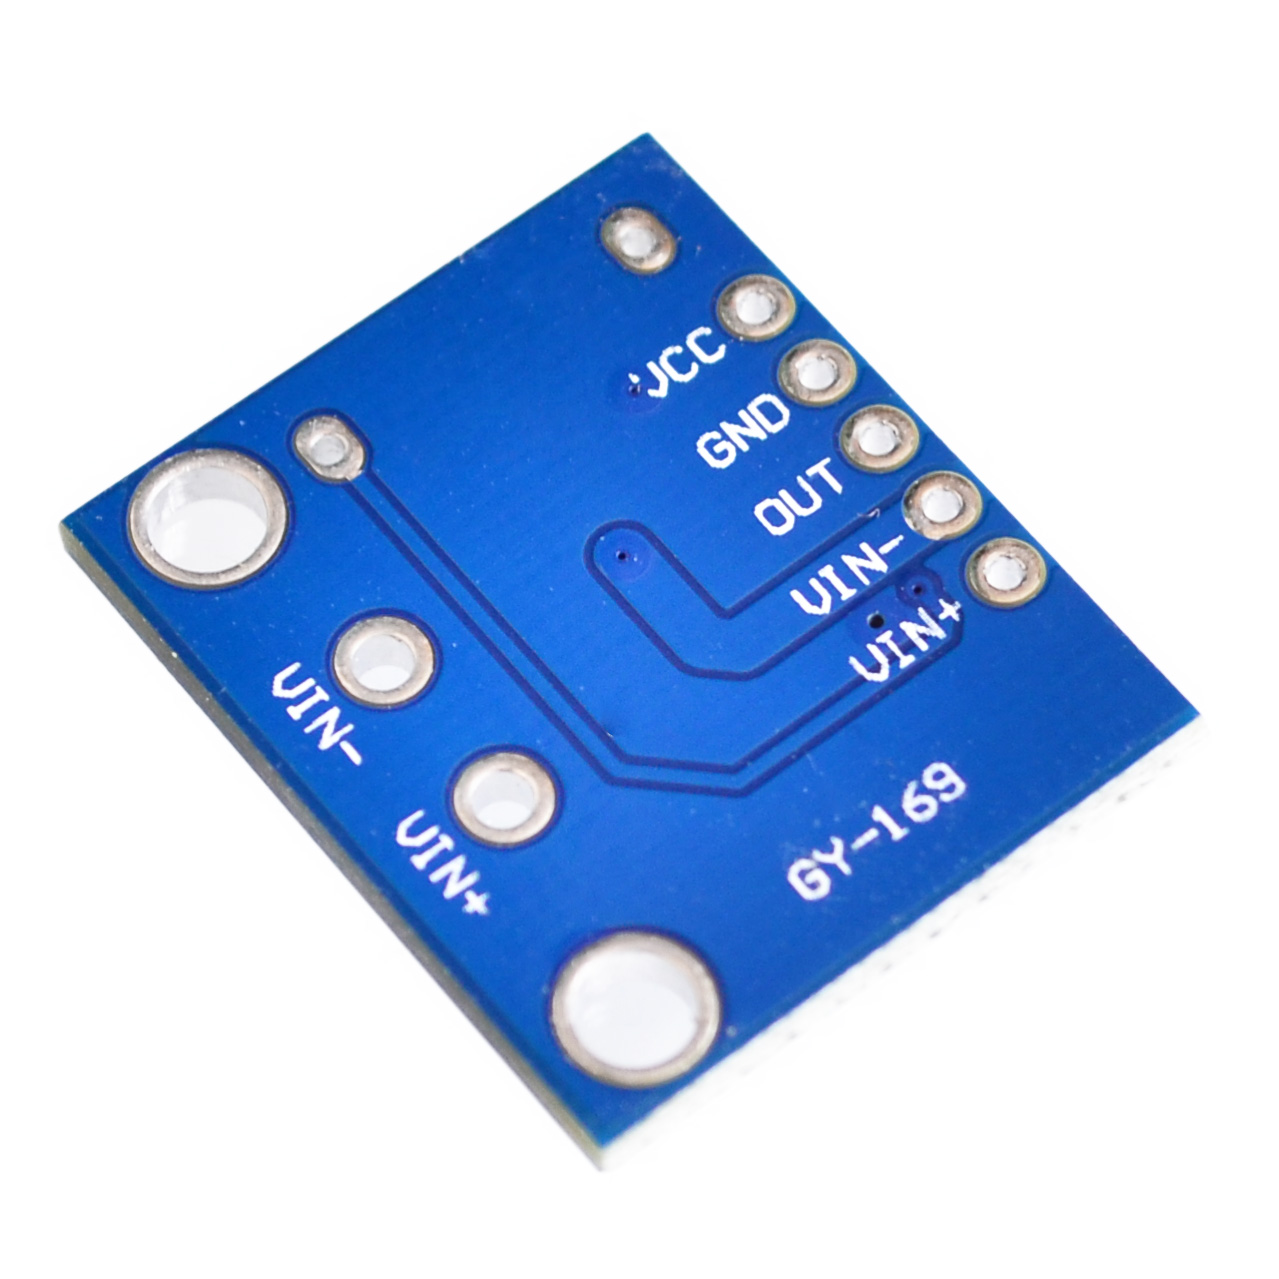 GY-169 INA169 precision current converter current sensor module